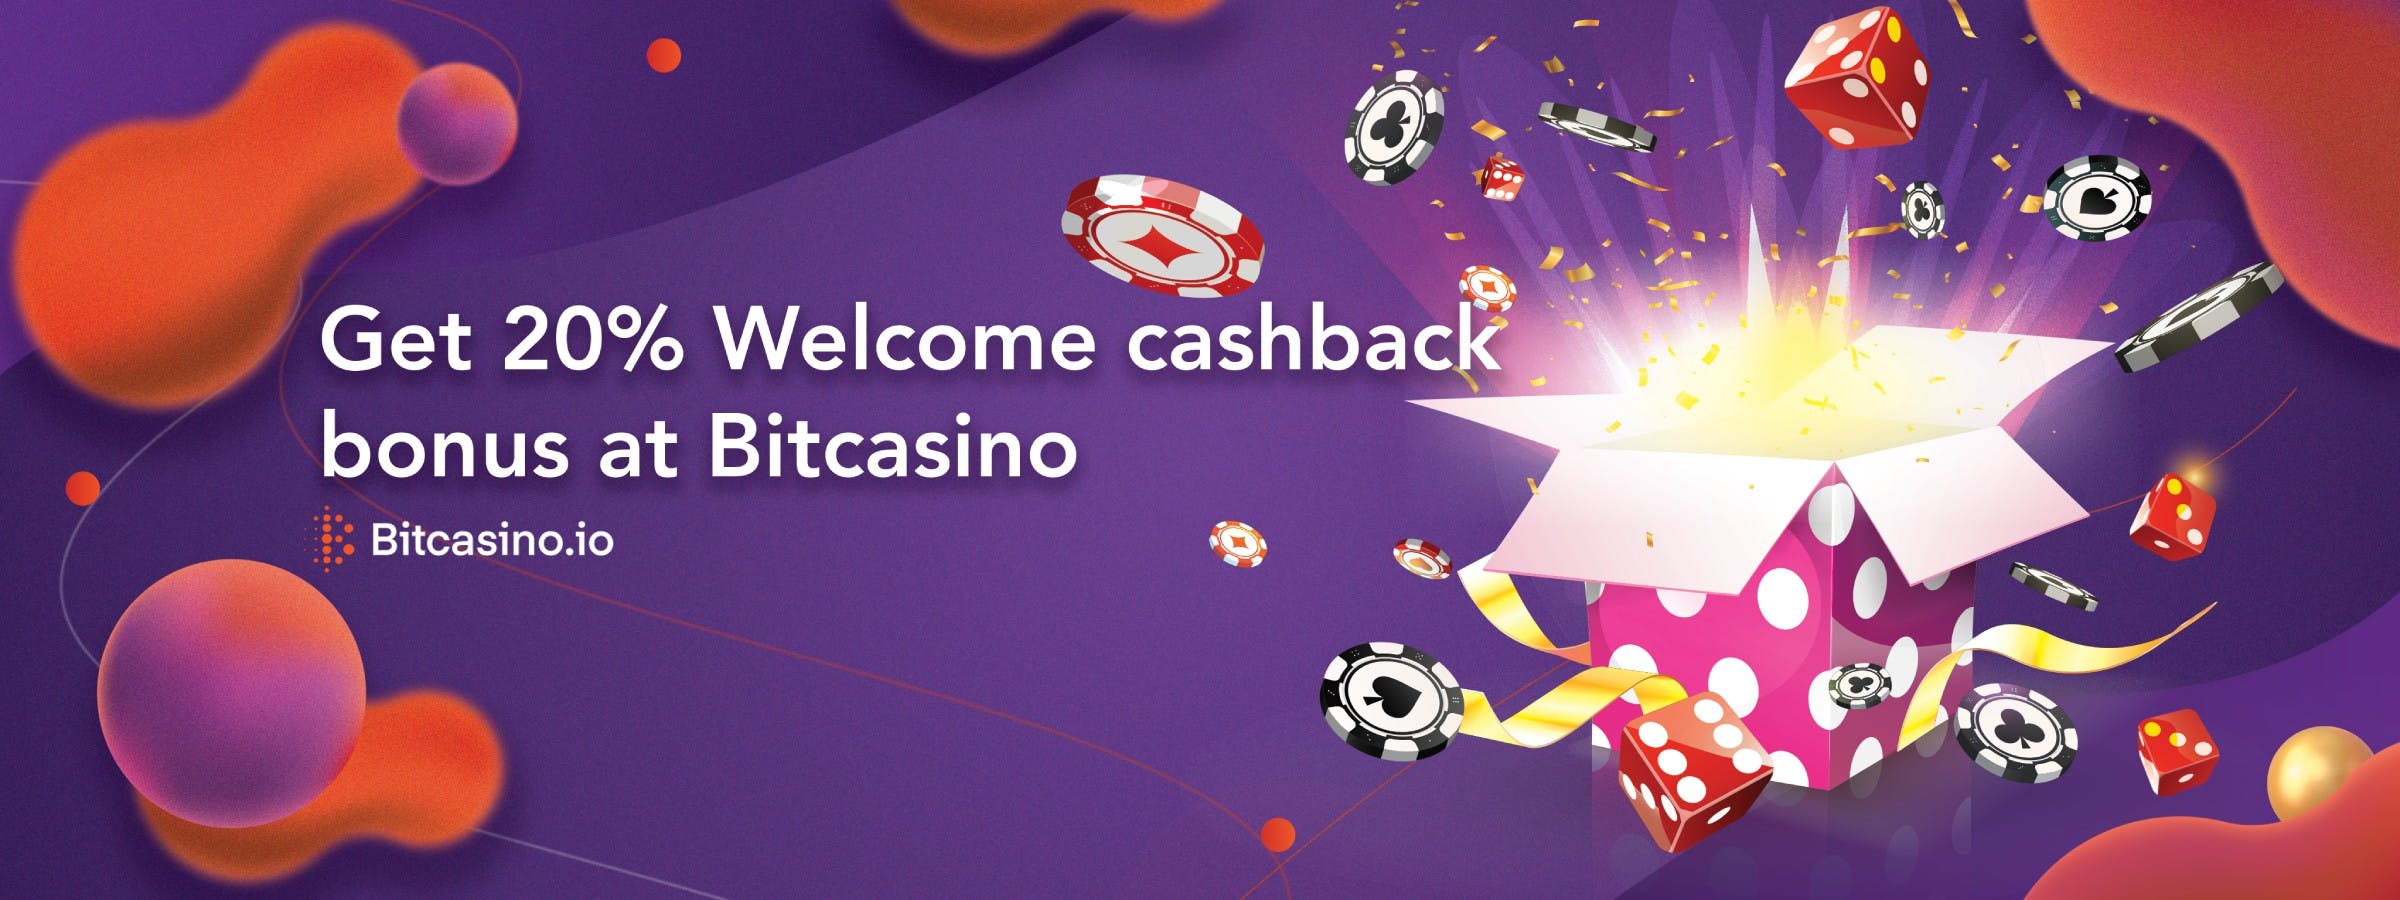 Get 20% Welcome cashback bonus at Bitcasino